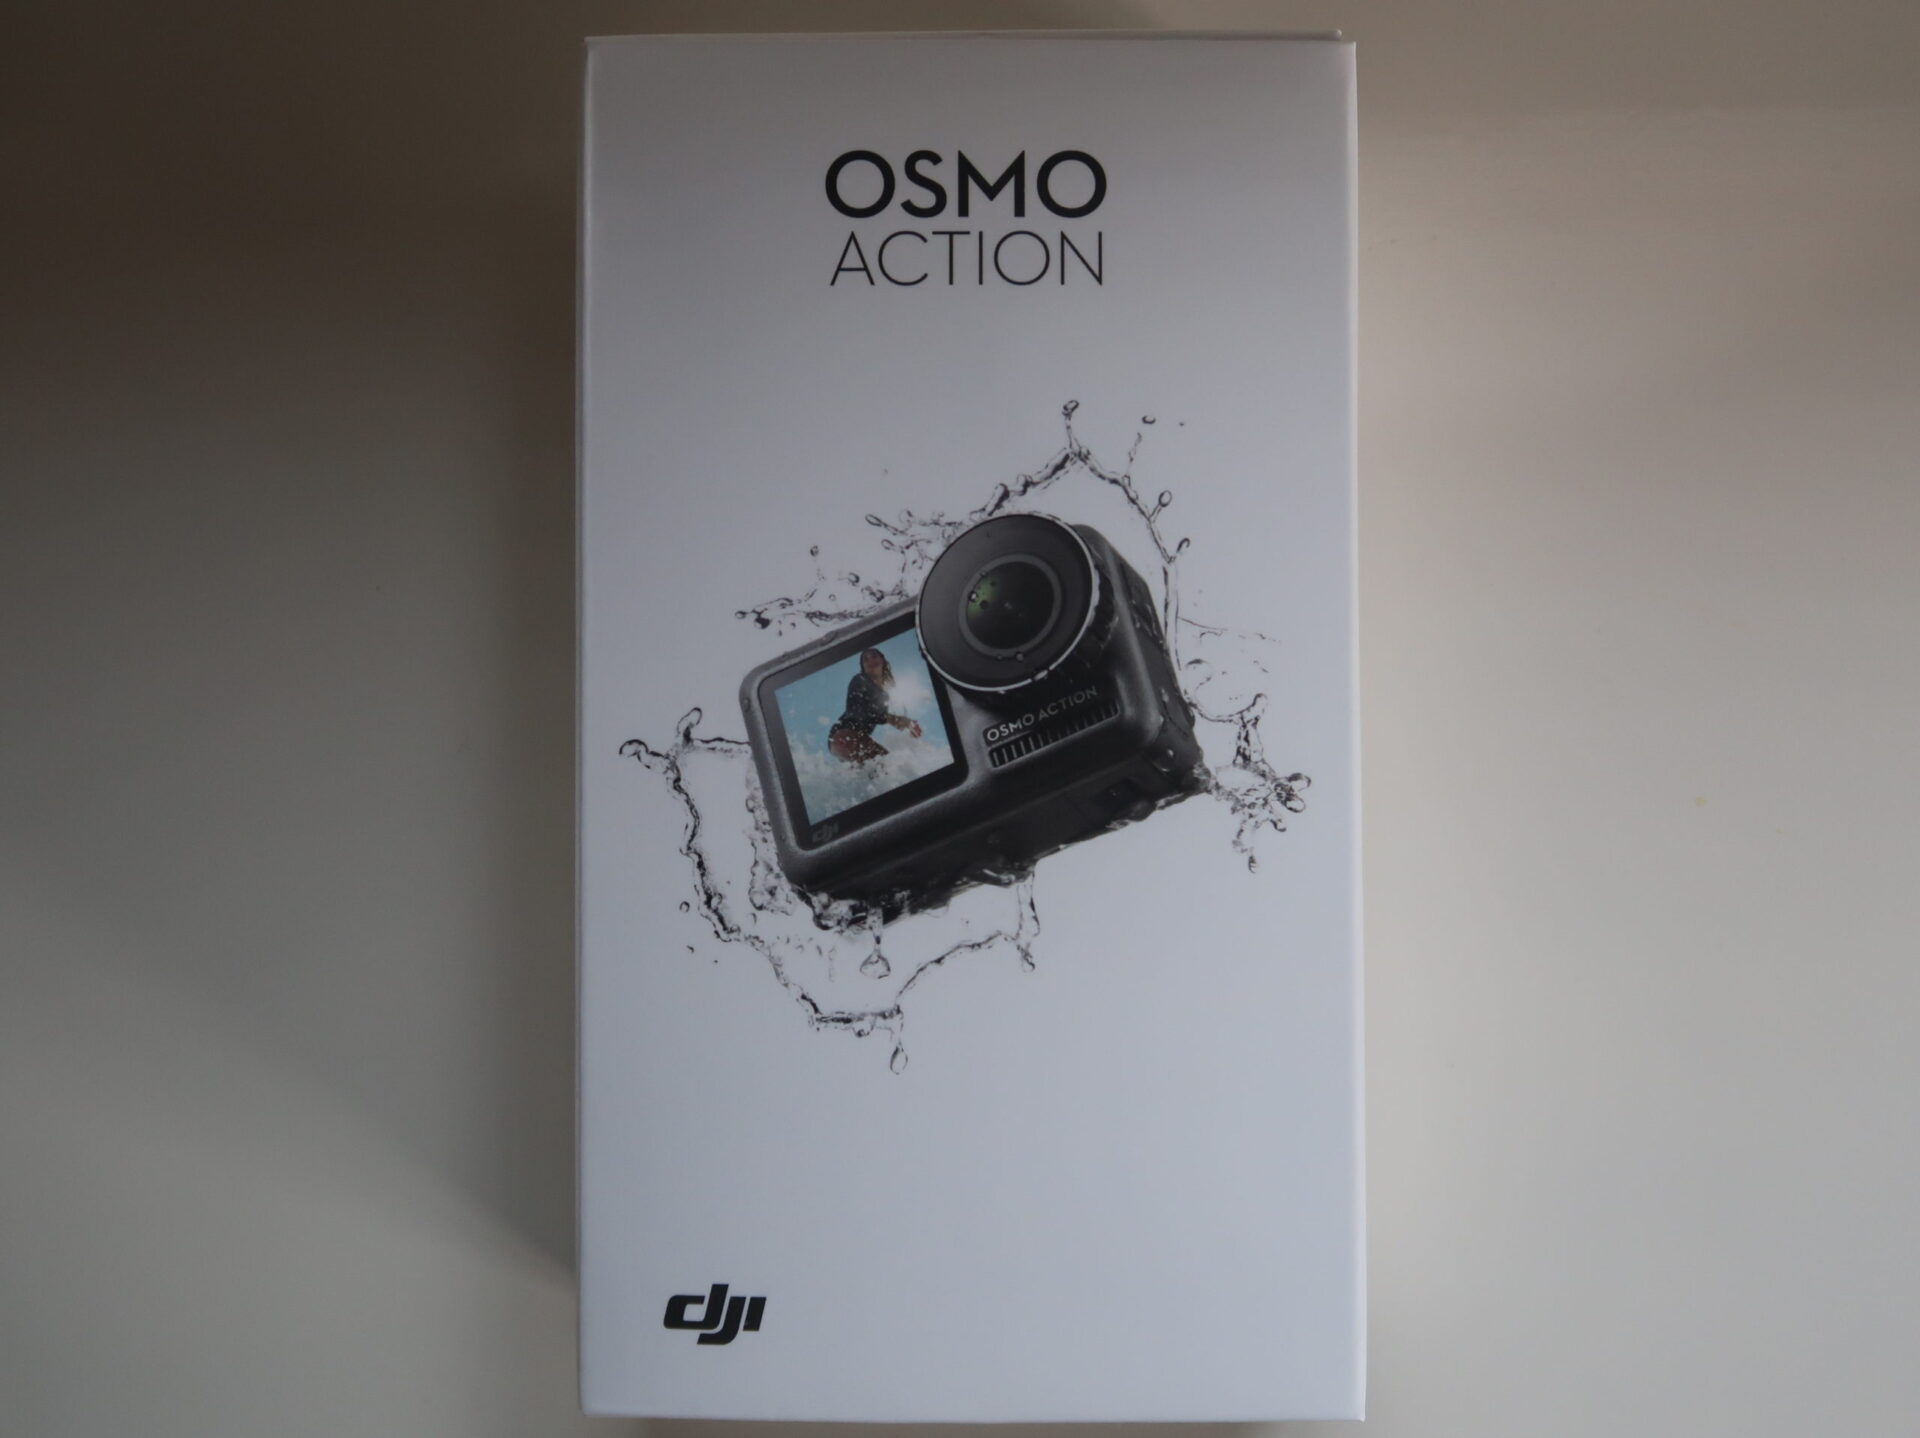 DJI OSMO ACTION オズモアクション / おすすめアクションカメラ紹介 / review vol.1 | smallworks